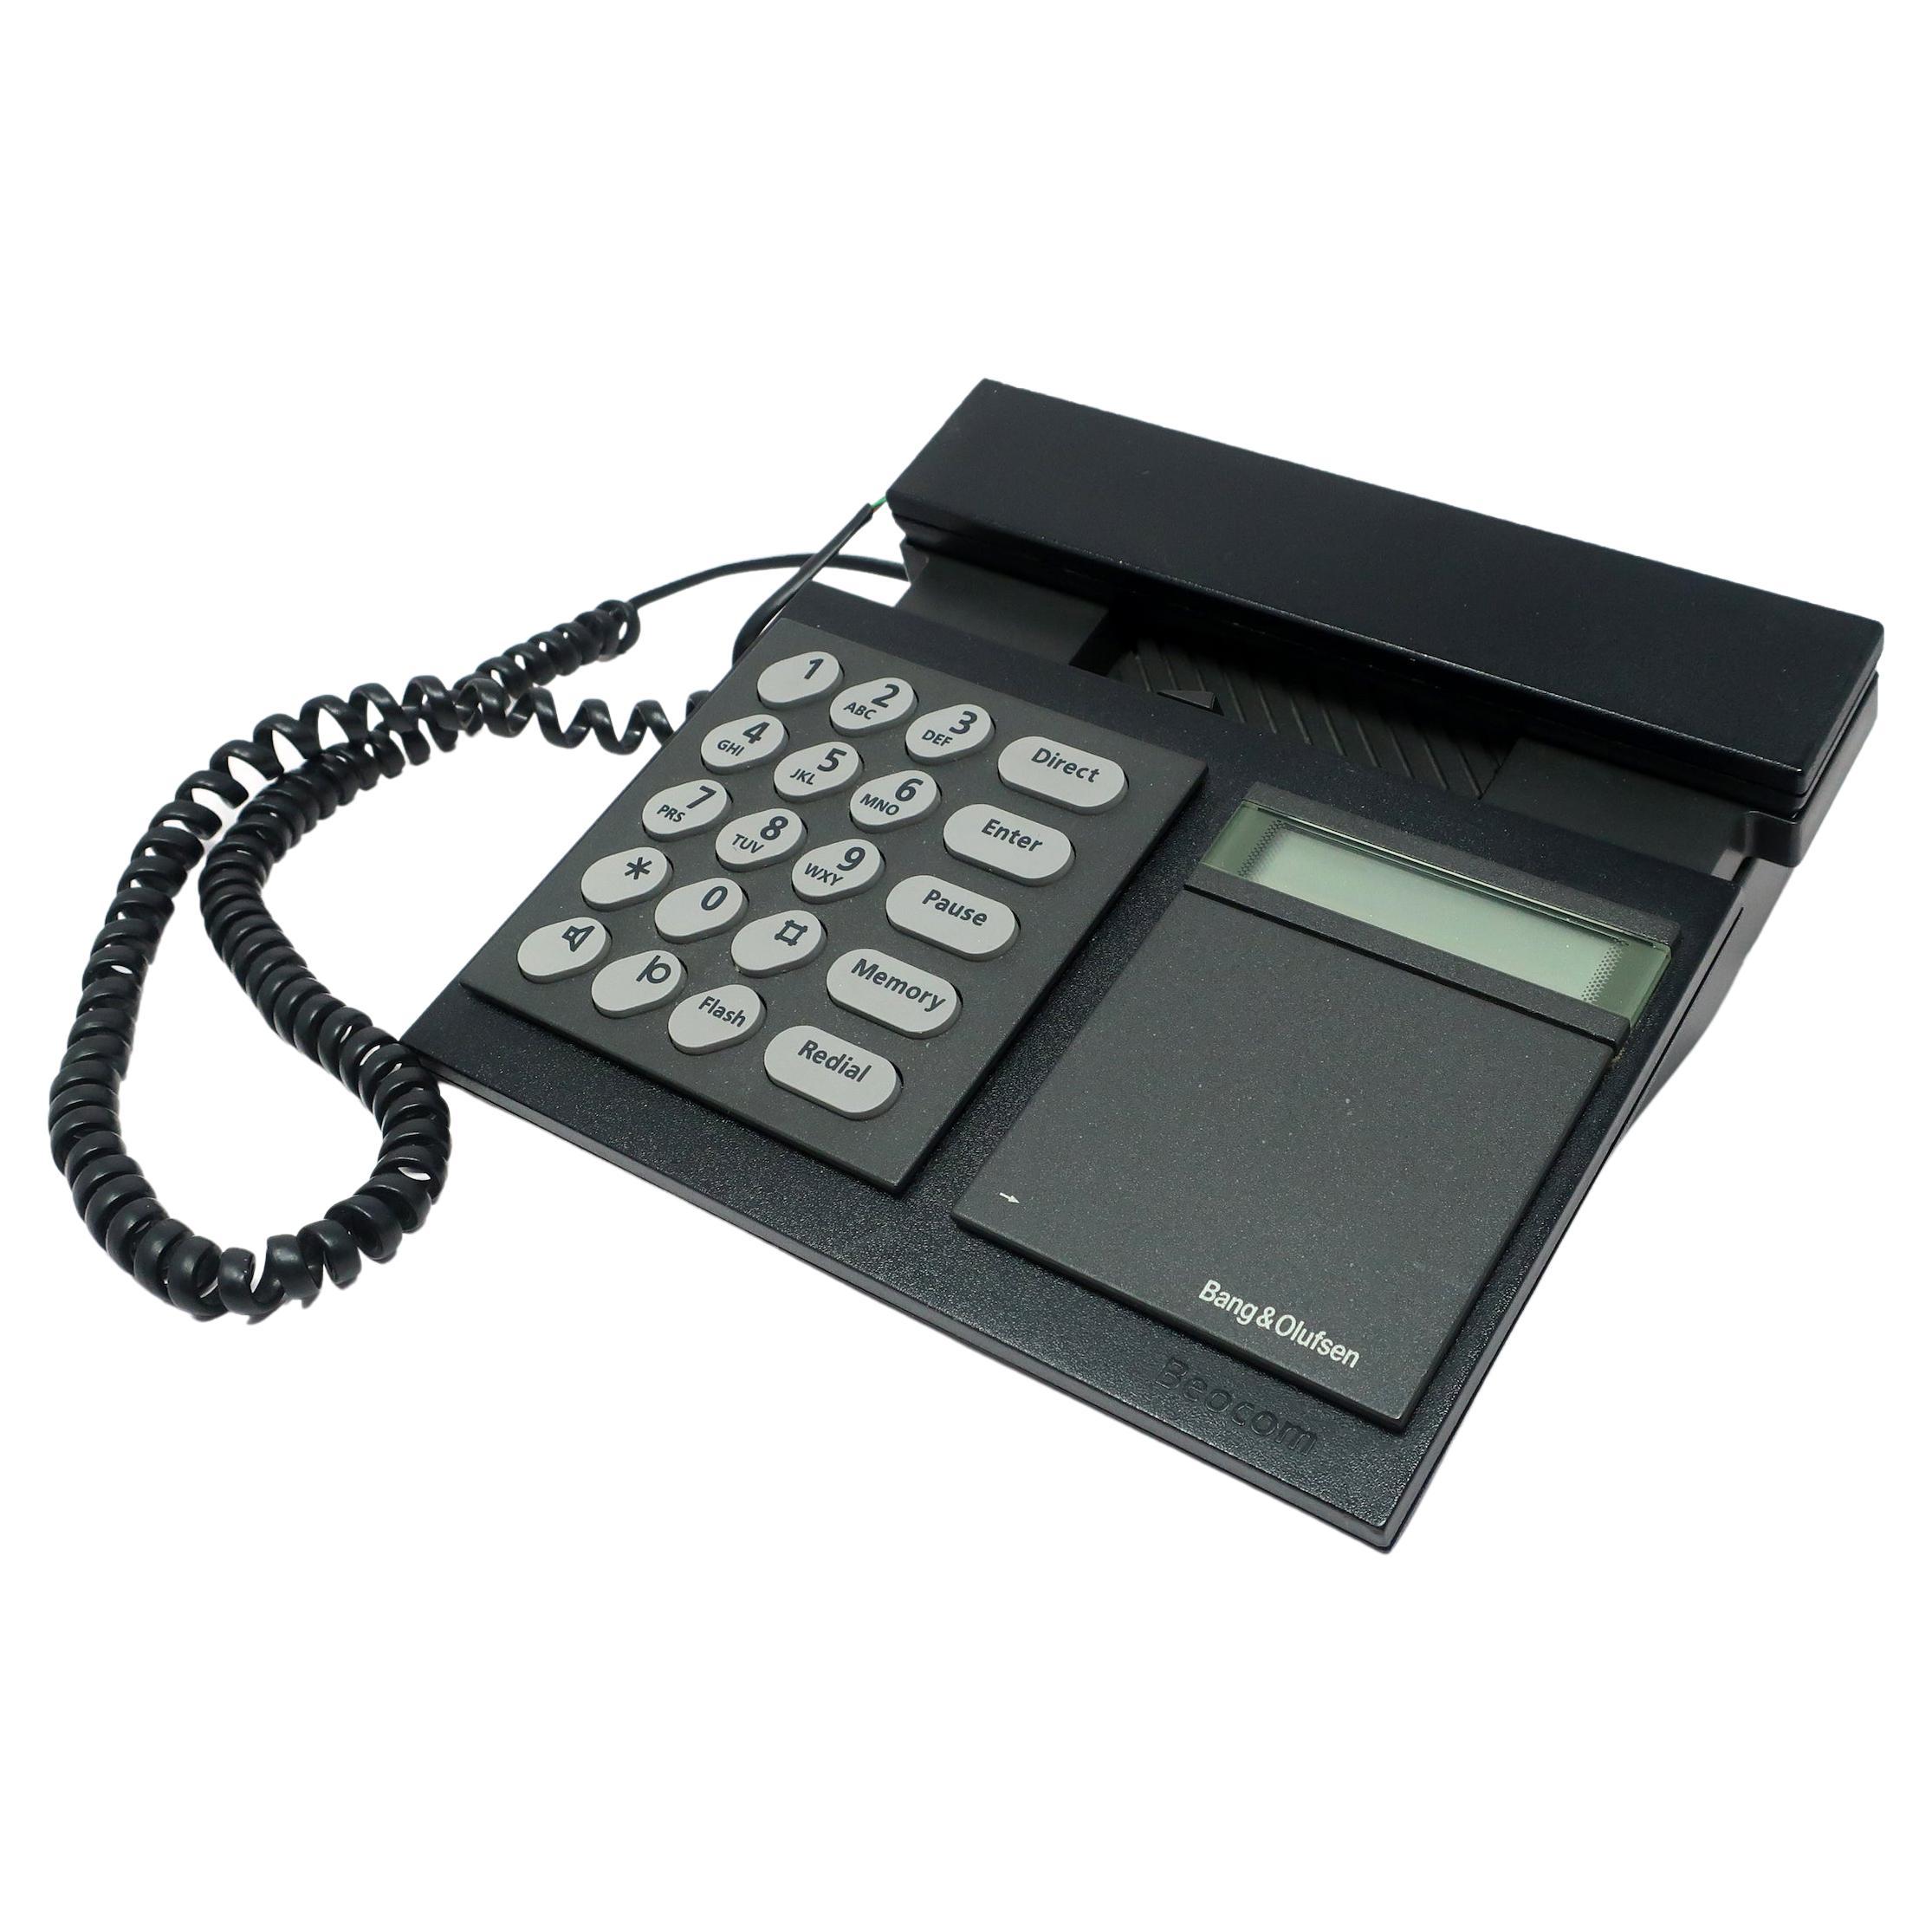 1980s Black Bang & Olufsen Beocom 2000 Phone For Sale